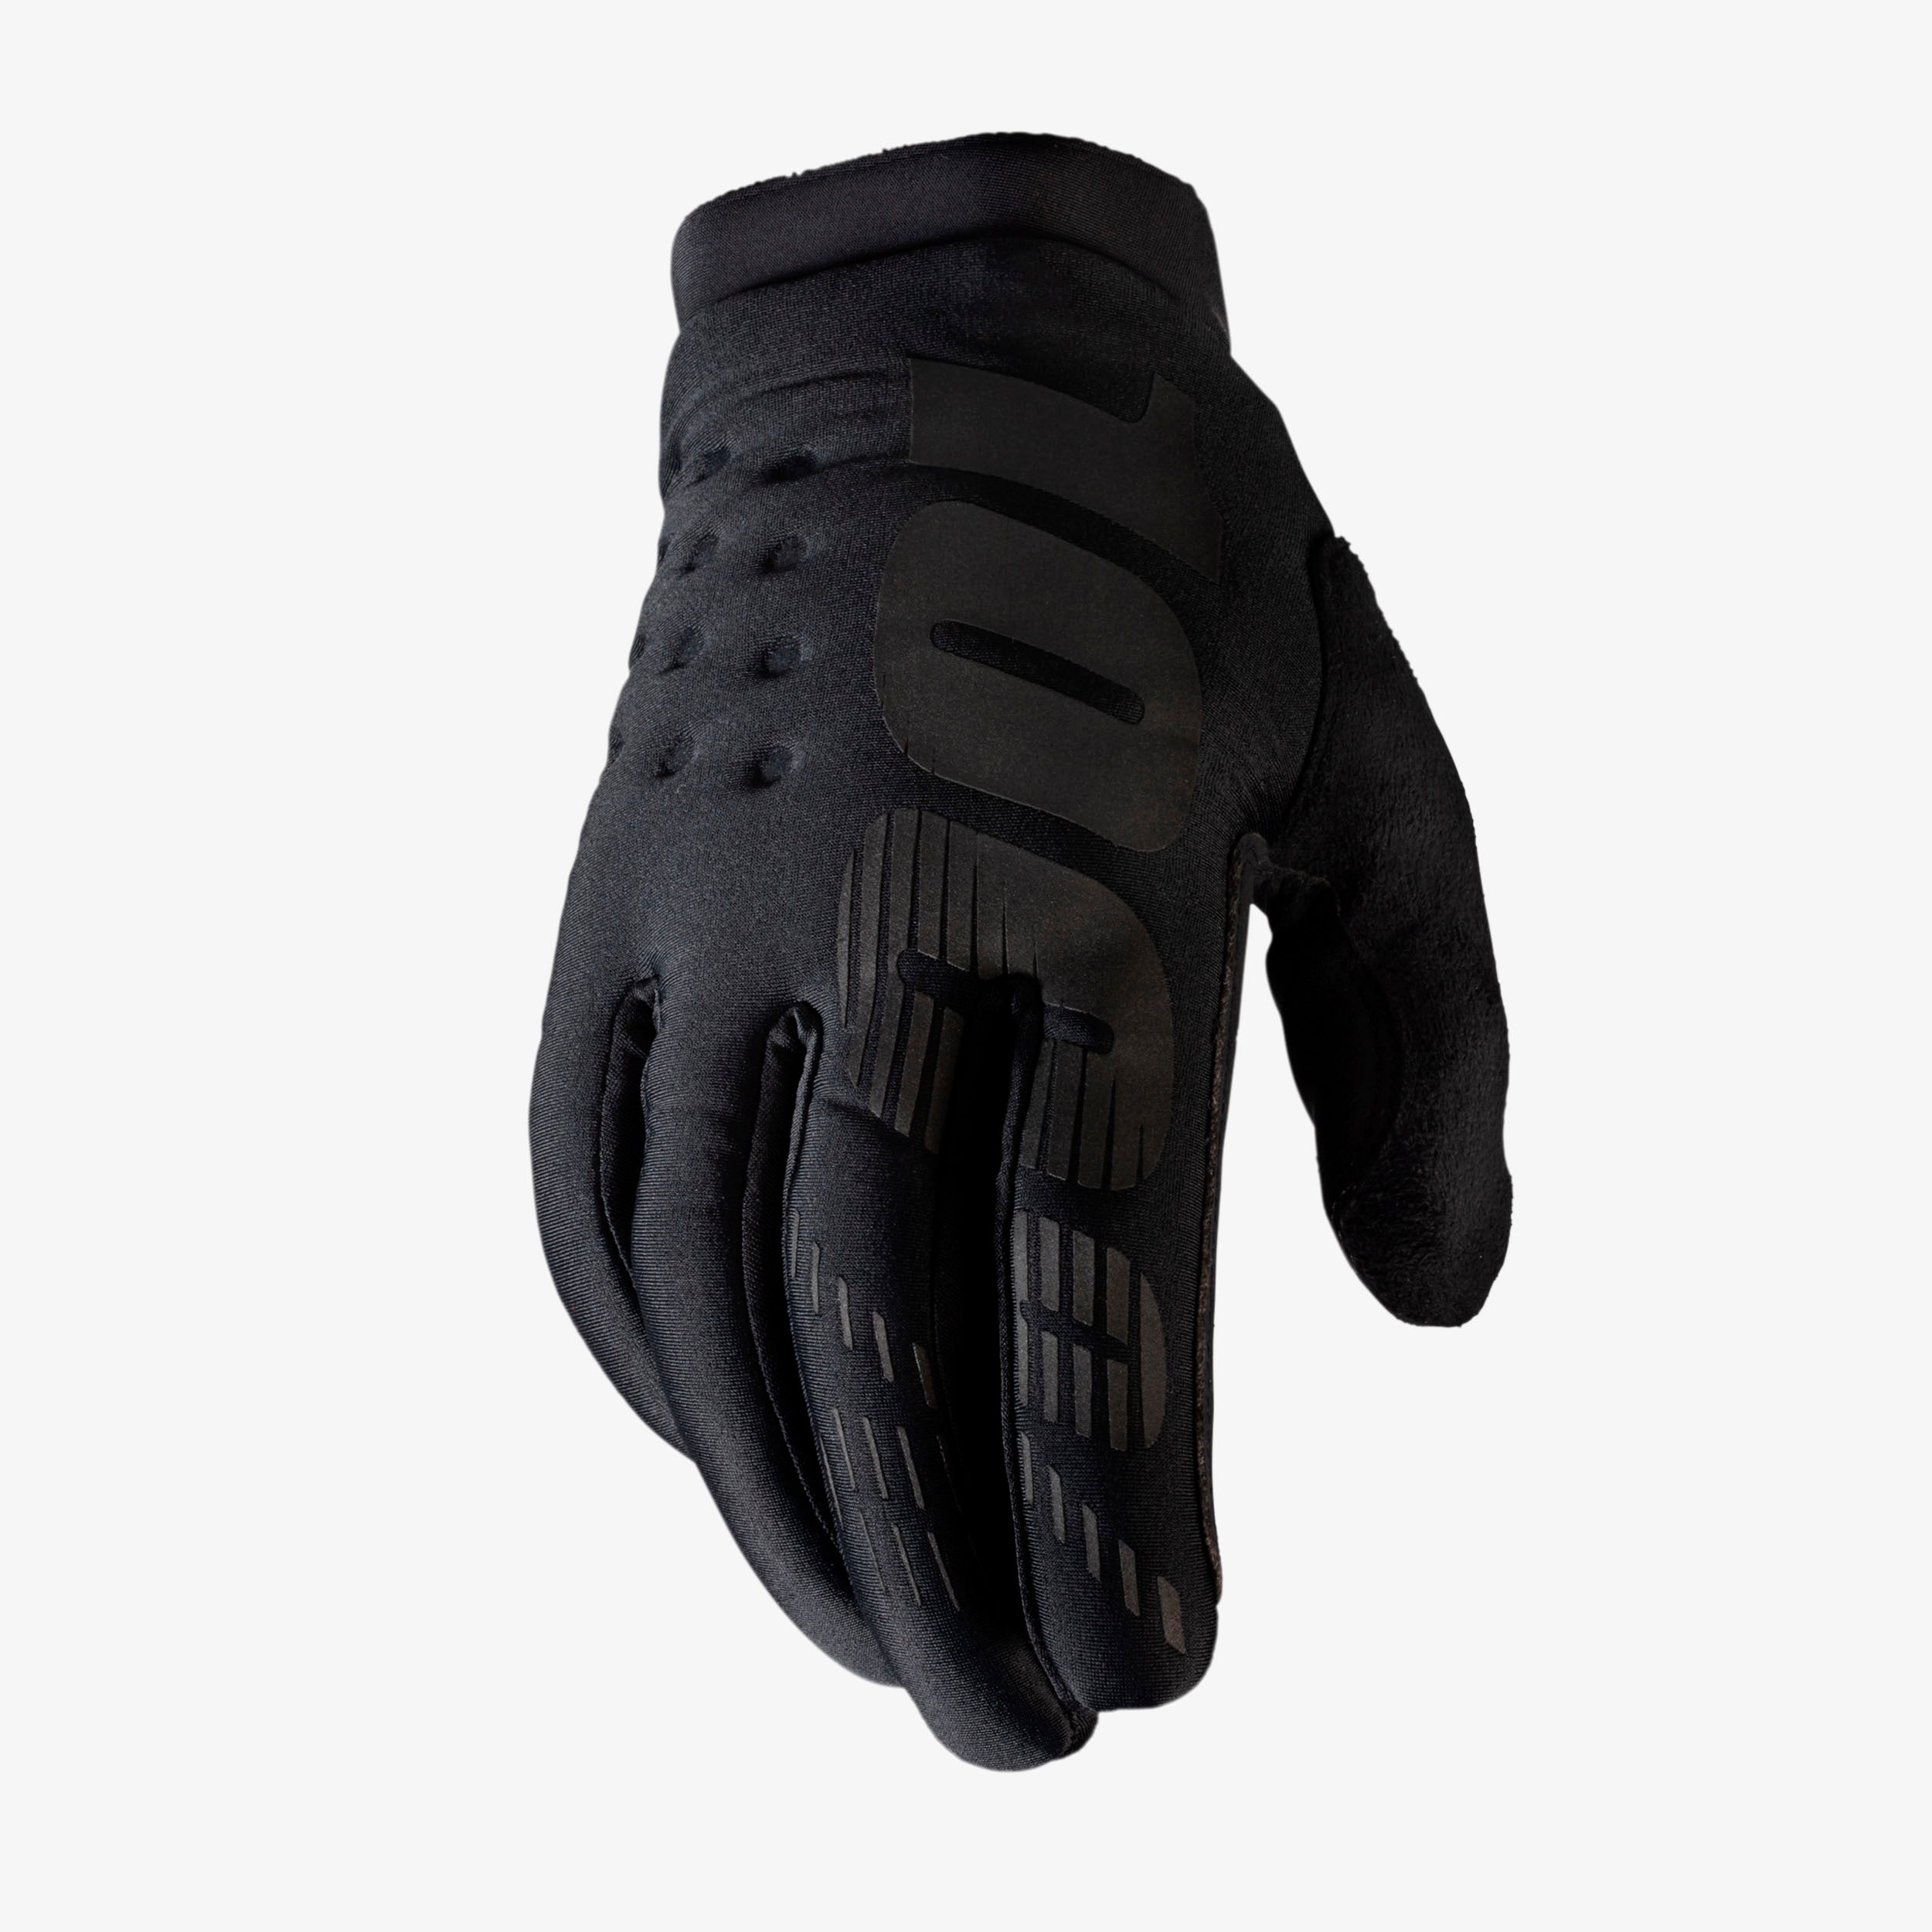 BRISKER Women's Glove - Black/Grey